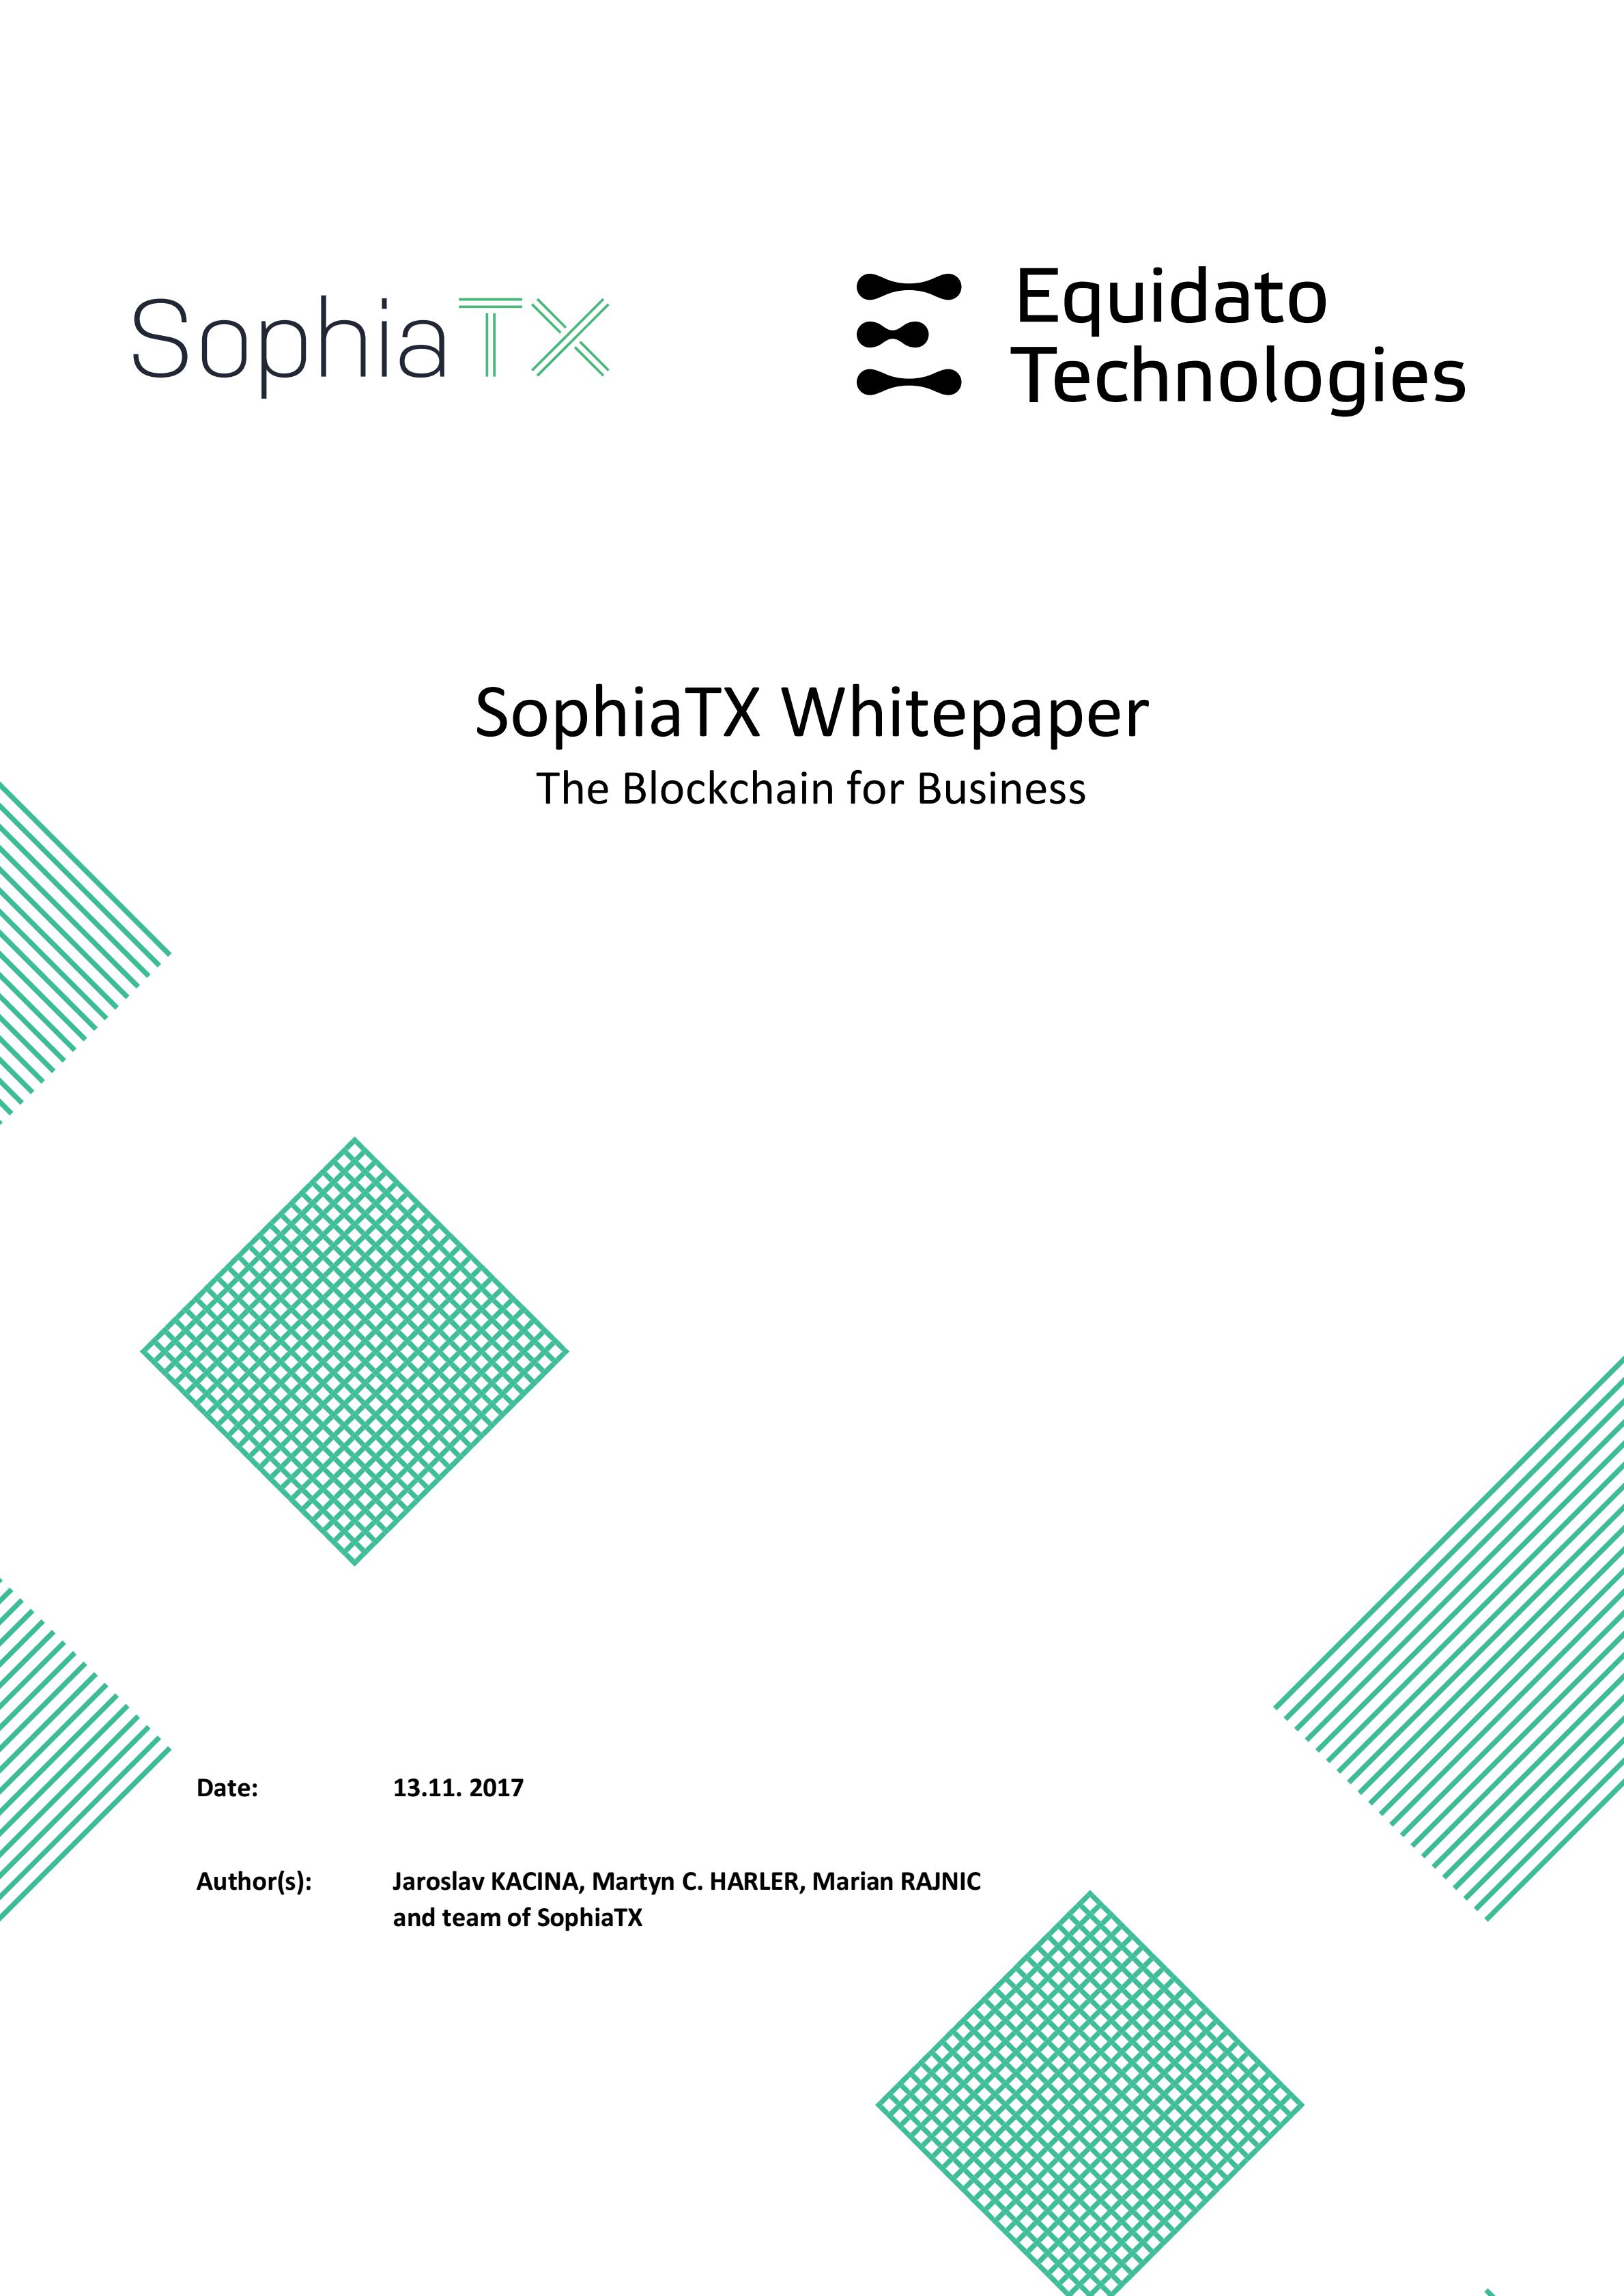 SPHTX_SophiaTX_Whitepaper_v1.9_00.jpg